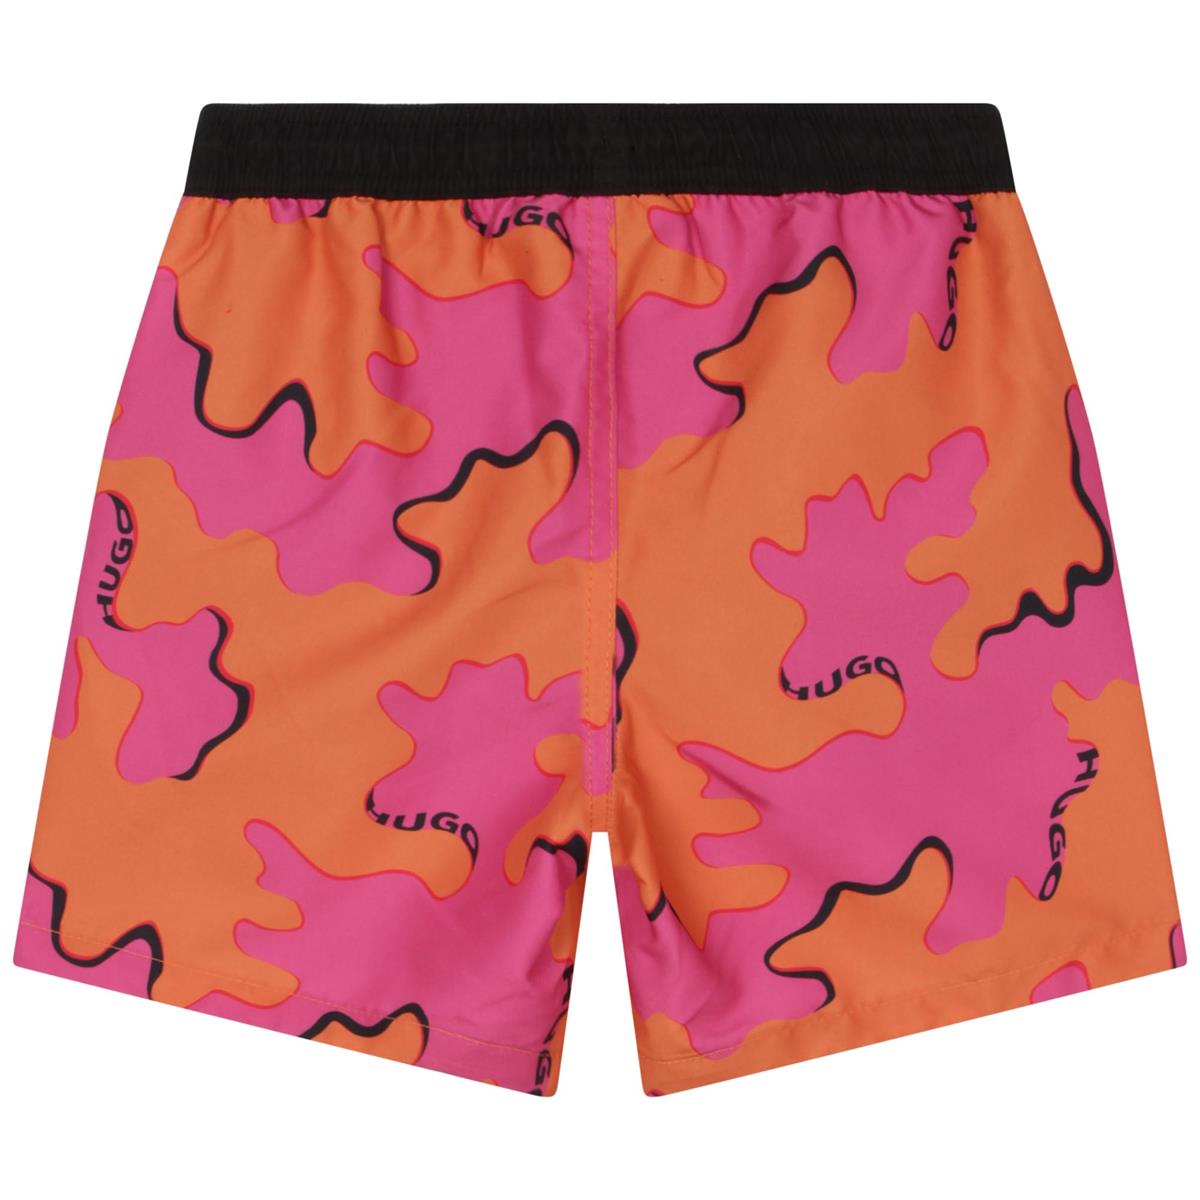 Boys Pink Swim Shorts